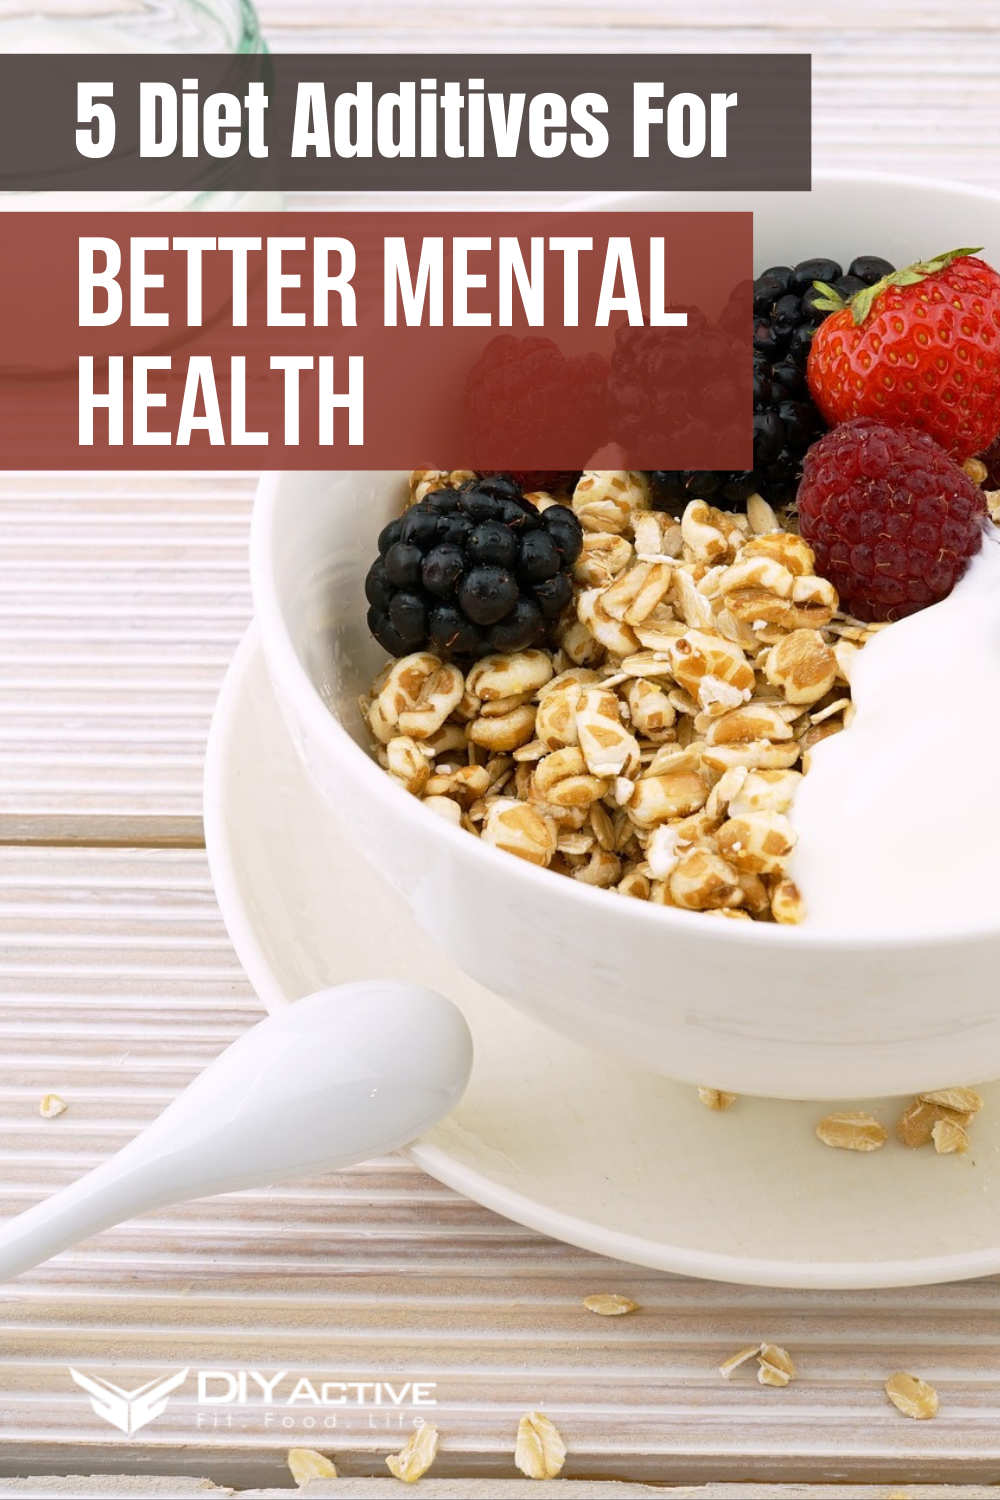 5 Diet Additives For Better Mental Health